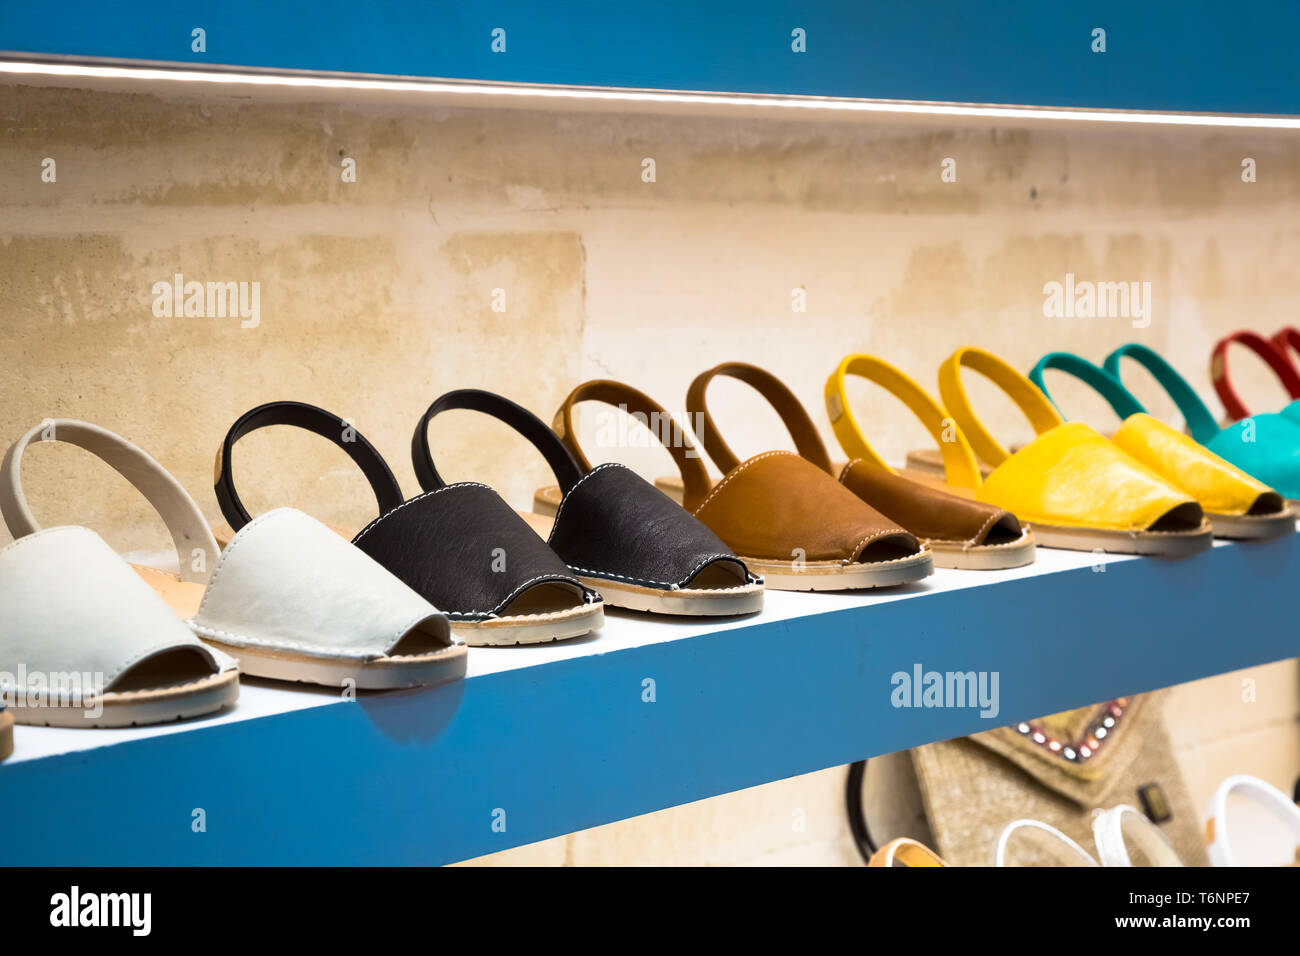 Shopping for Avarca (Menorca sandals Stock Photo - Alamy